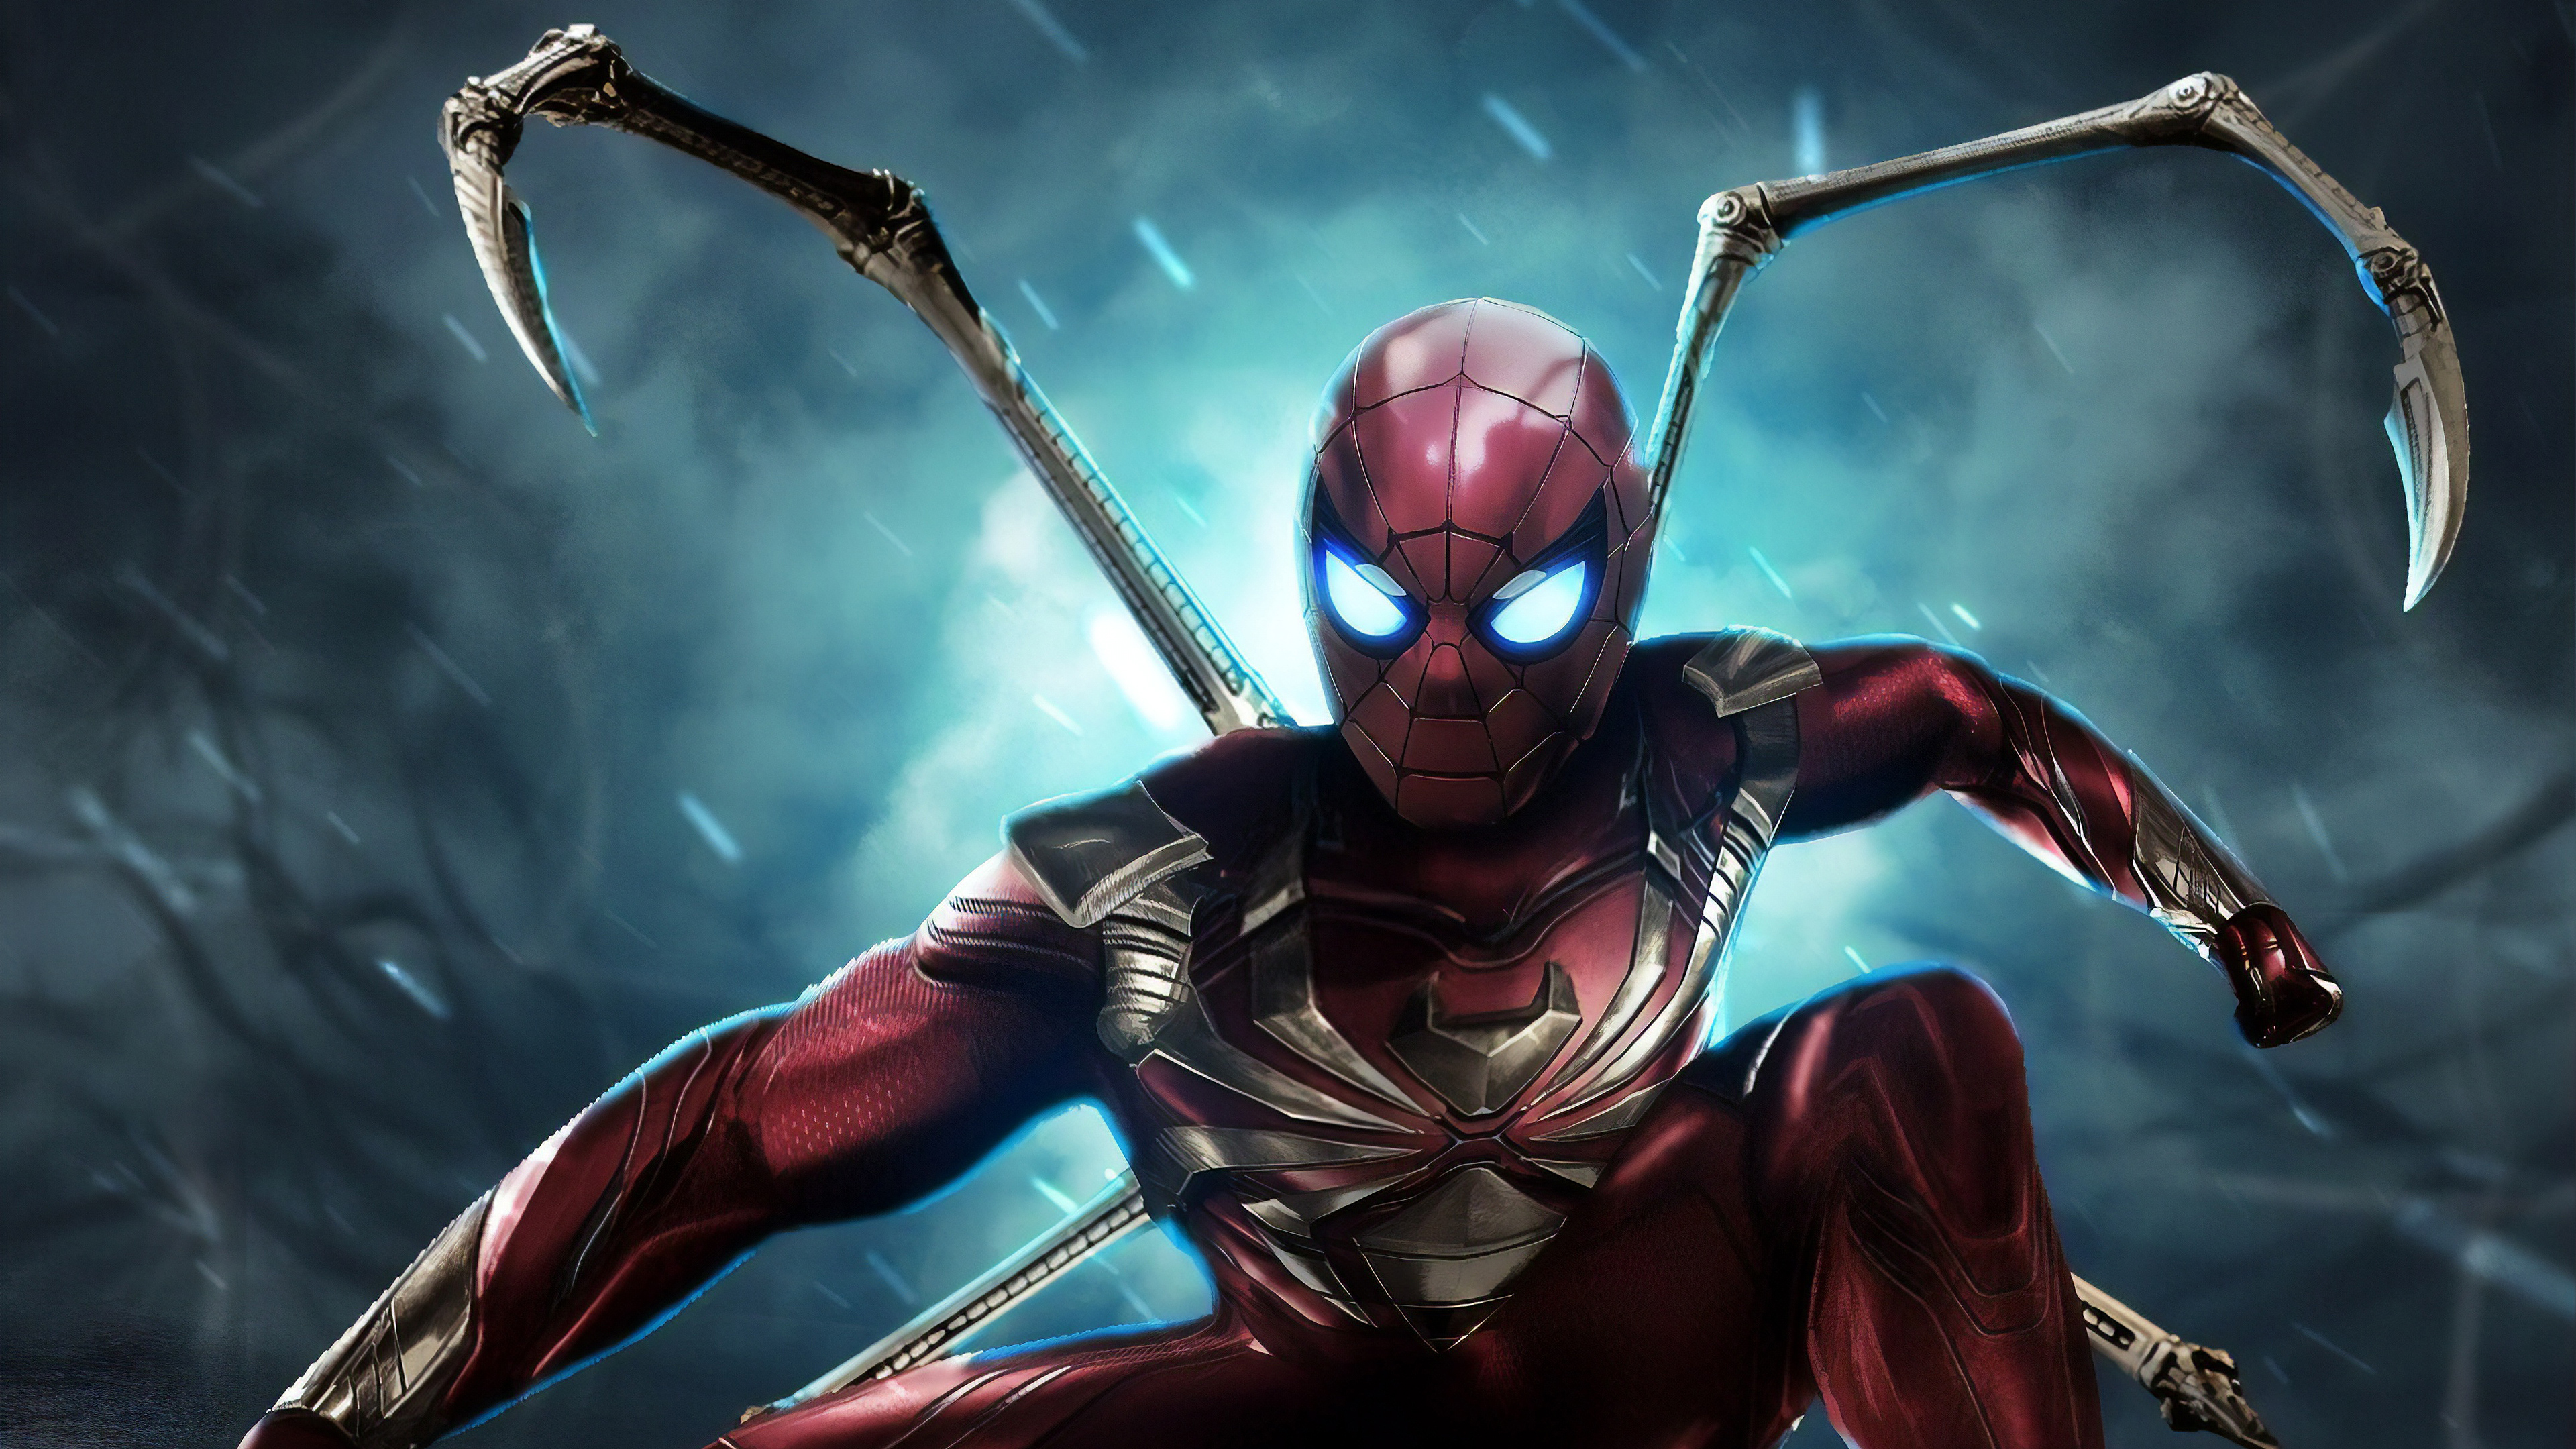 Iron Spider Killer Suit, HD Superheroes, 4k Wallpapers, Image, Backgrounds,...